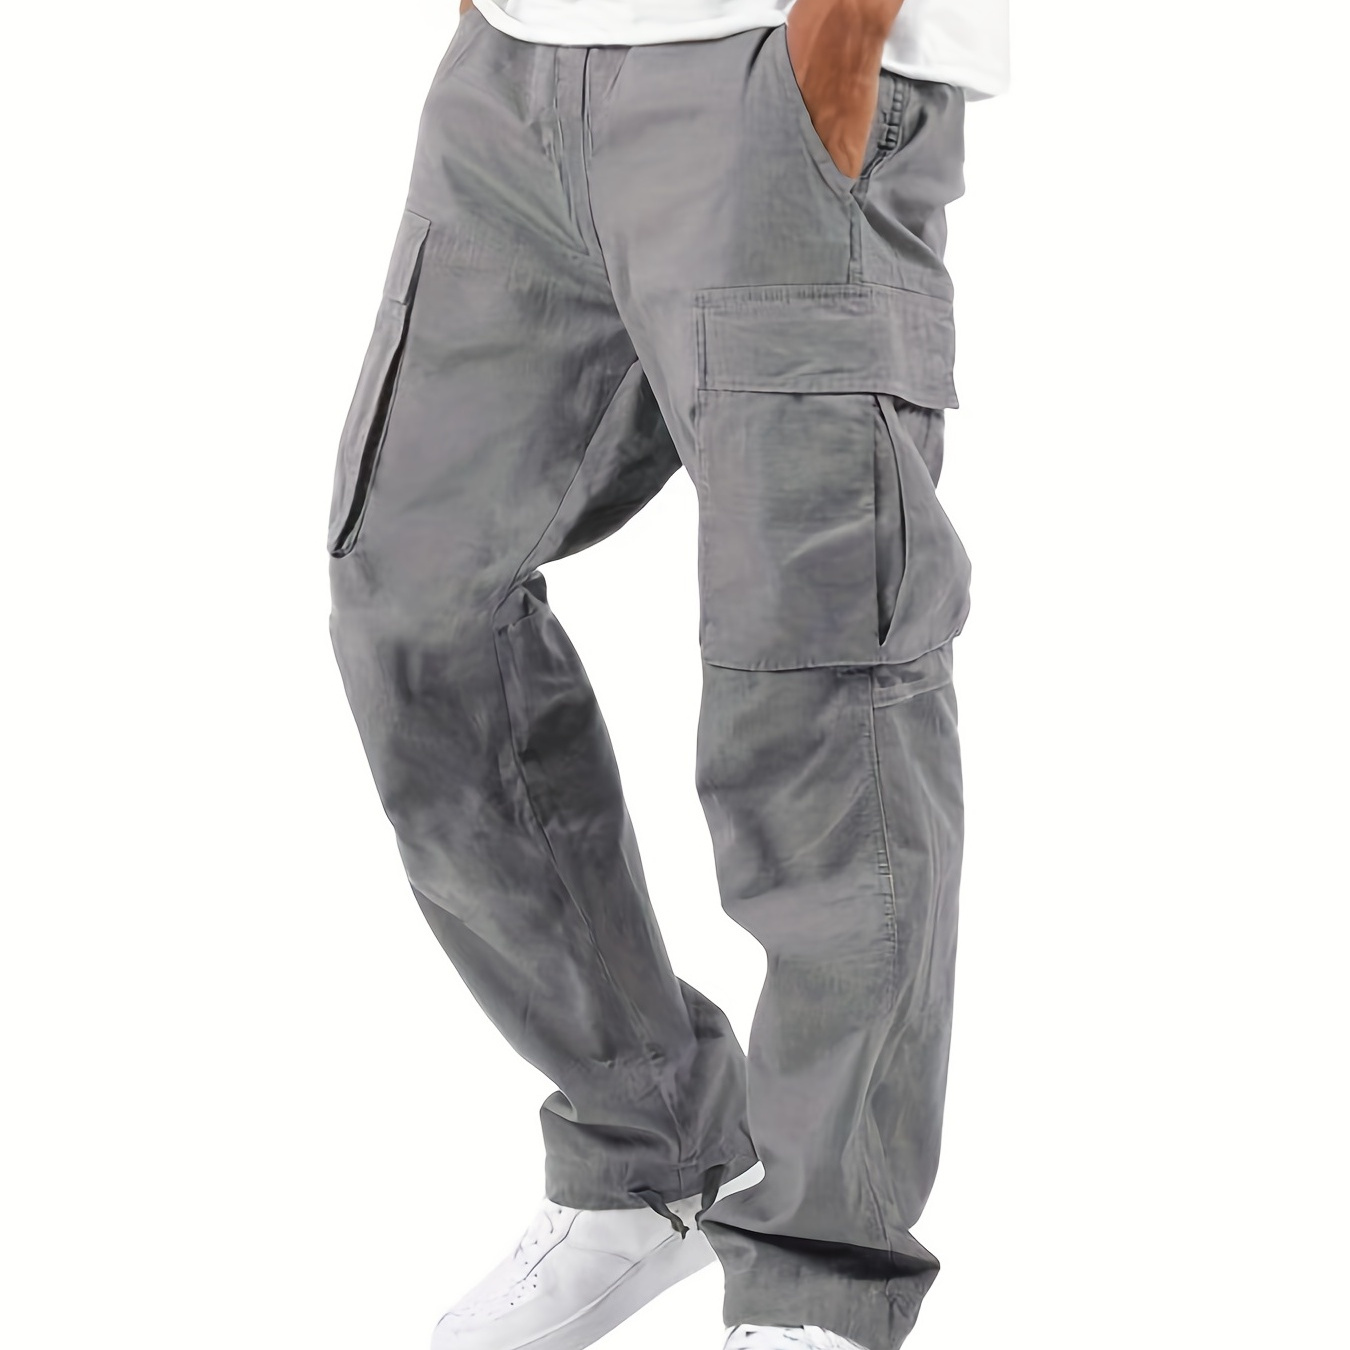 

95% Cotton Men's Casual Jogger Pants, Cotton Drawstring Basic Cargo Pants, Hiking Outdoor Track Pants